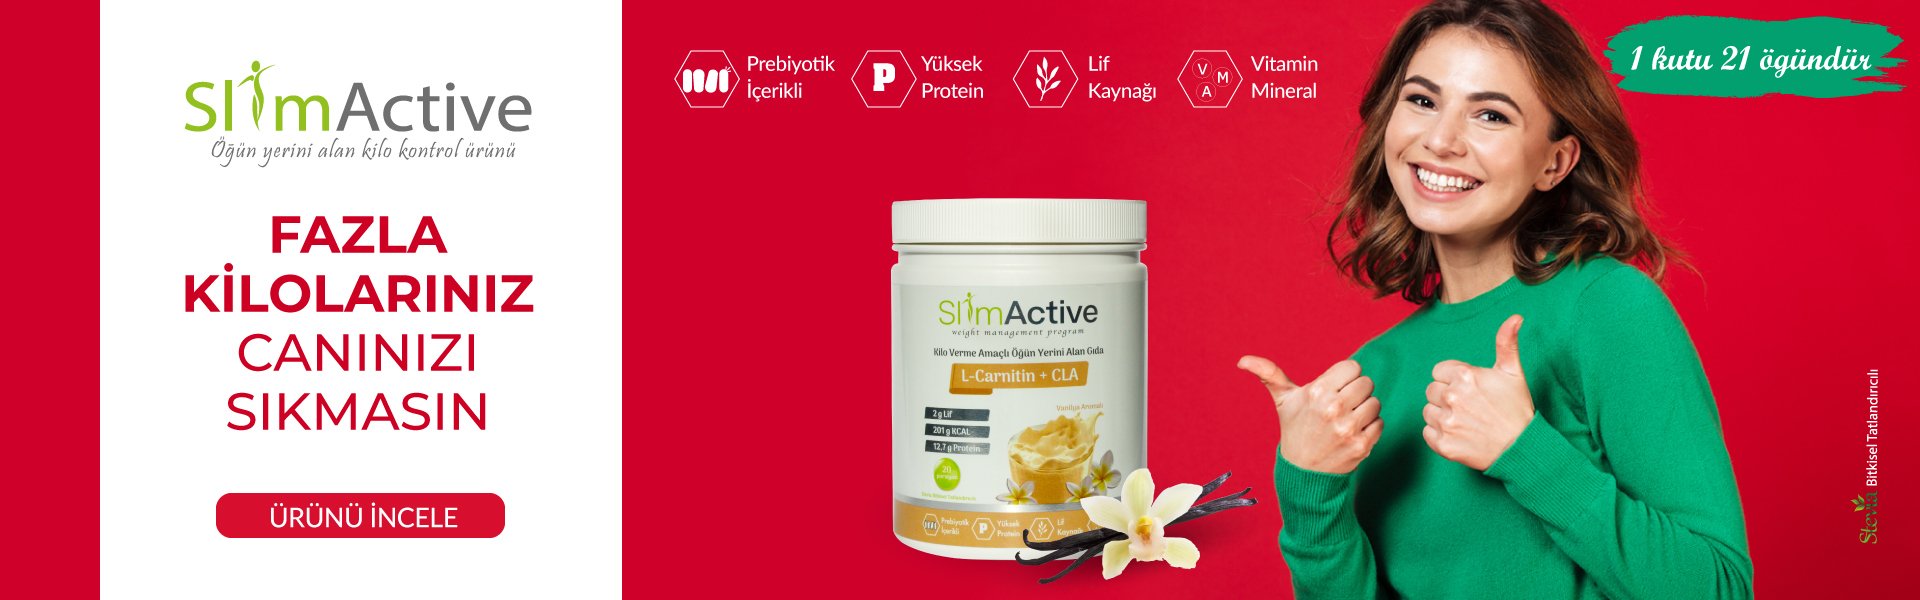 Slim Active, kilo kontrol ürünüdür.